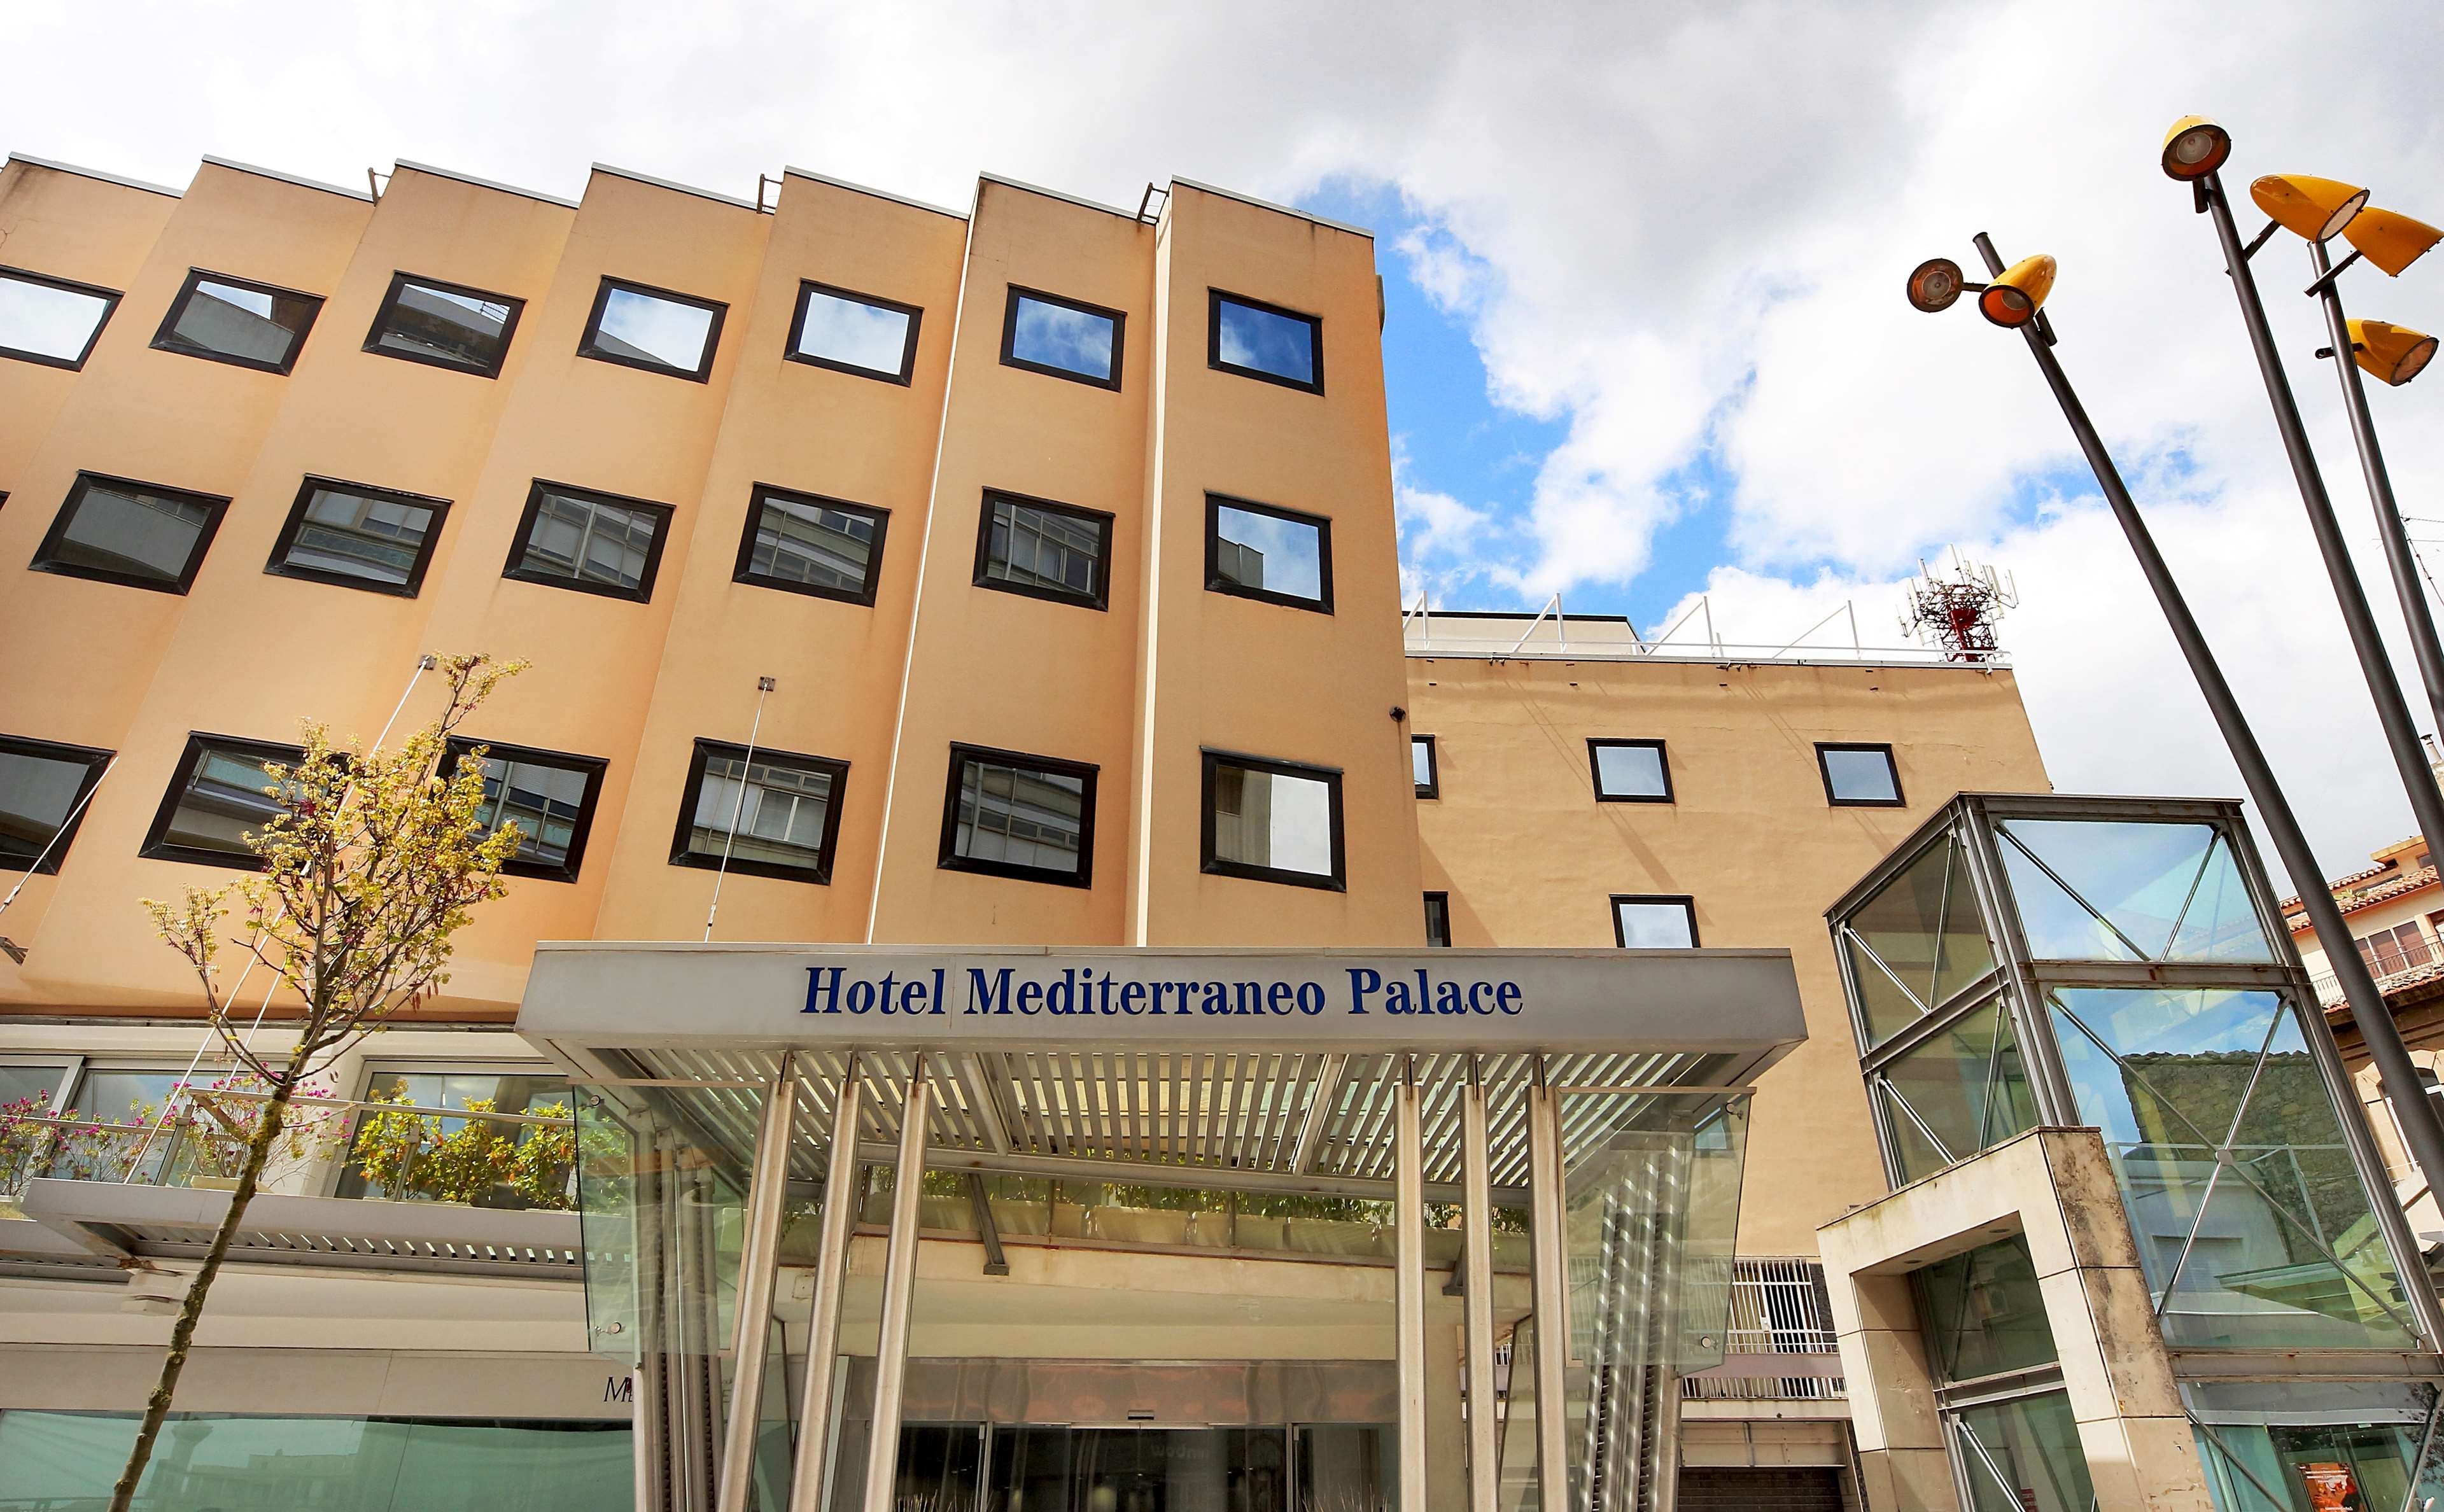 Hotel Mediterraneo Palace image